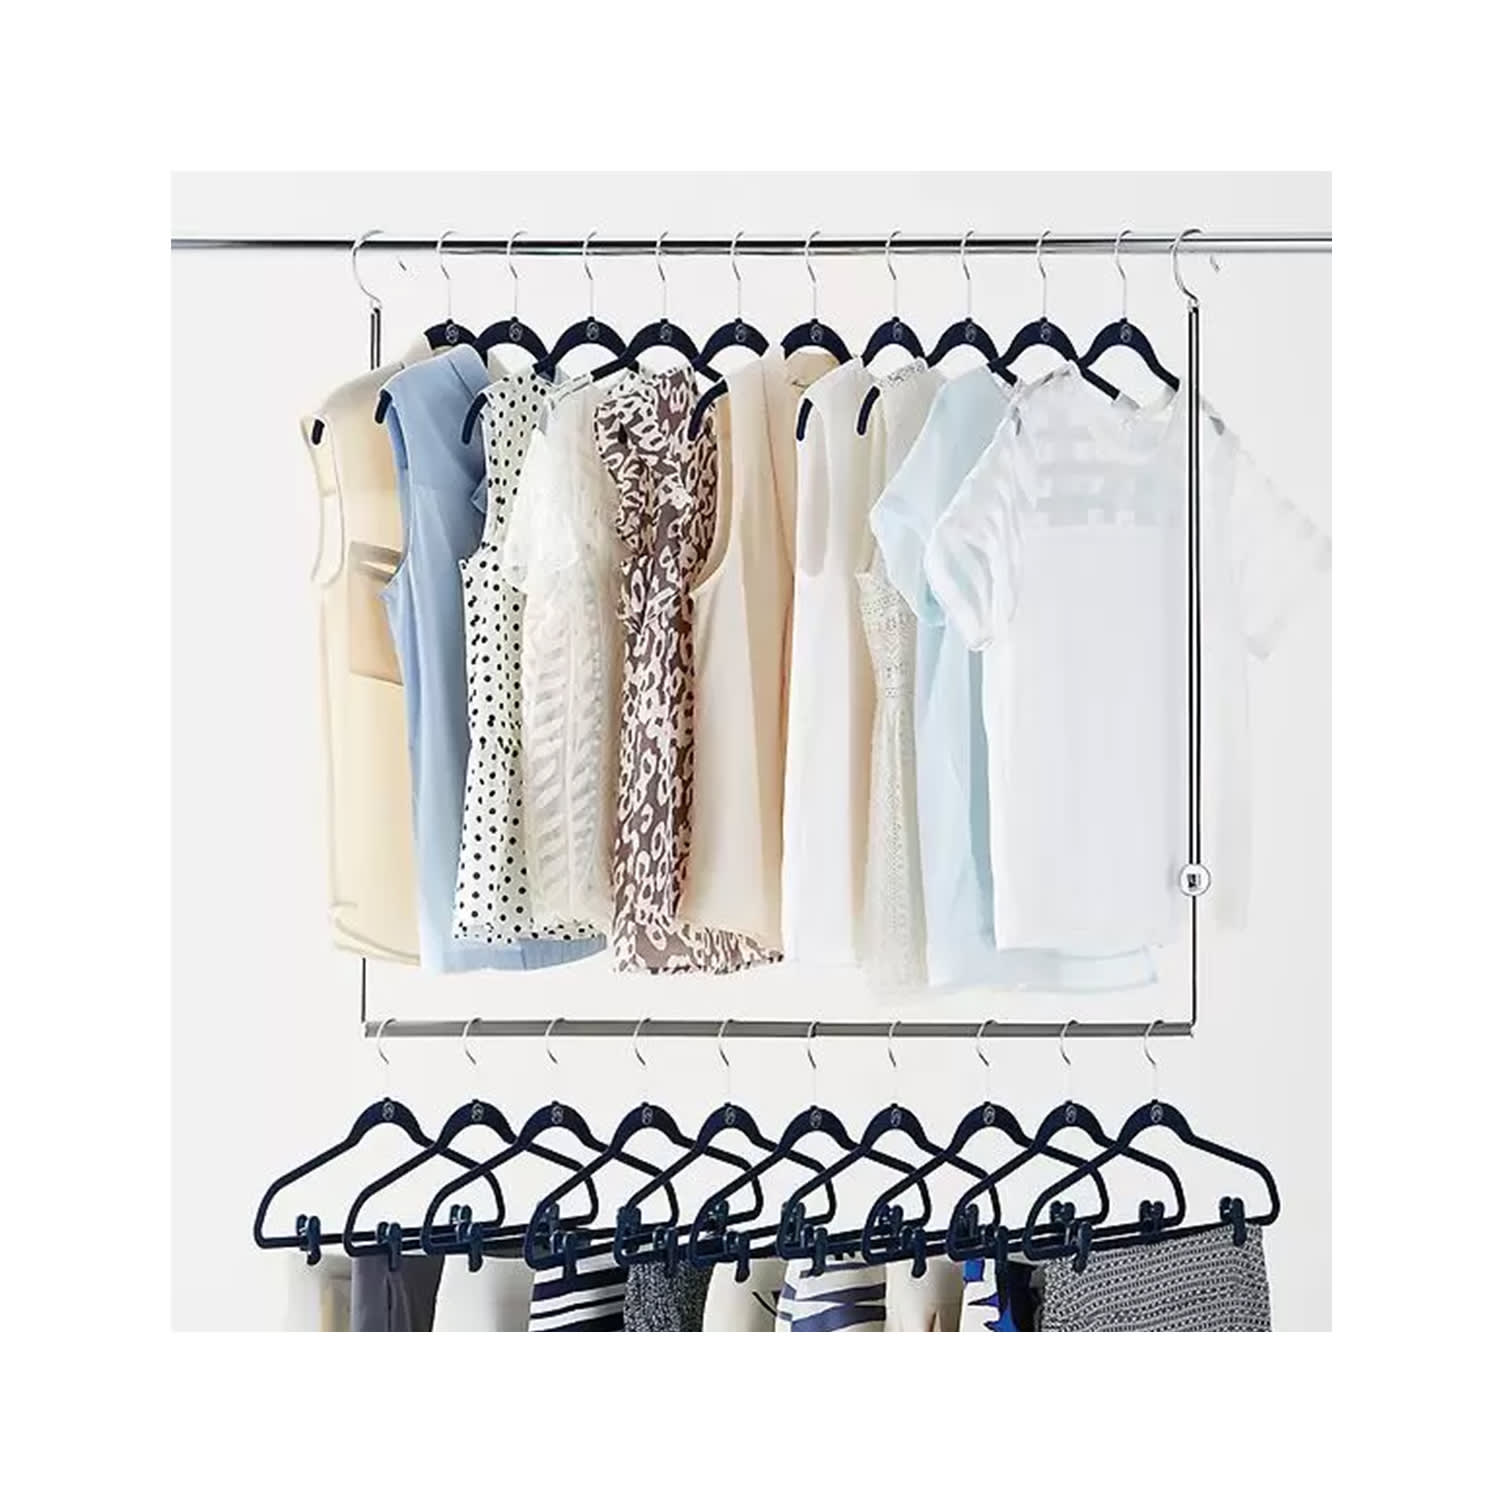 https://cdn.apartmenttherapy.info/image/upload/v1692726020/at/organize-clean/umbra-dublet-adjustable-closet-rod-expander.jpg